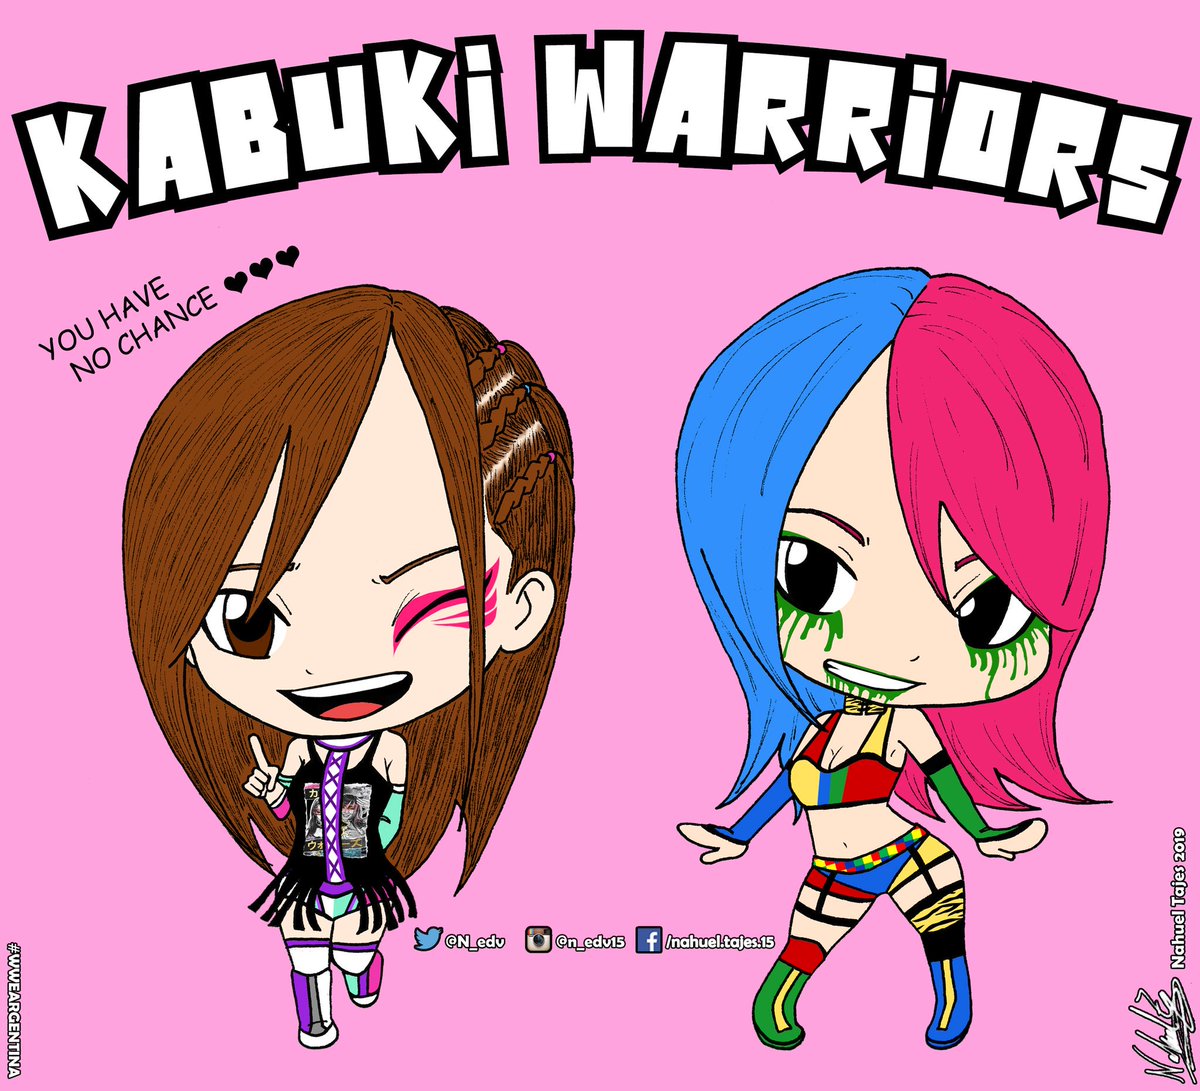 You have no chance against the Kabuki Warriors 

@KairiSaneWWE @WWEAsuka 

#KabukiWarriors #KairiSane #PiratePrincess #Asuka #empressoftomorrow #wwe #raw #womenstagtitles #wrestling #fanart @WWE